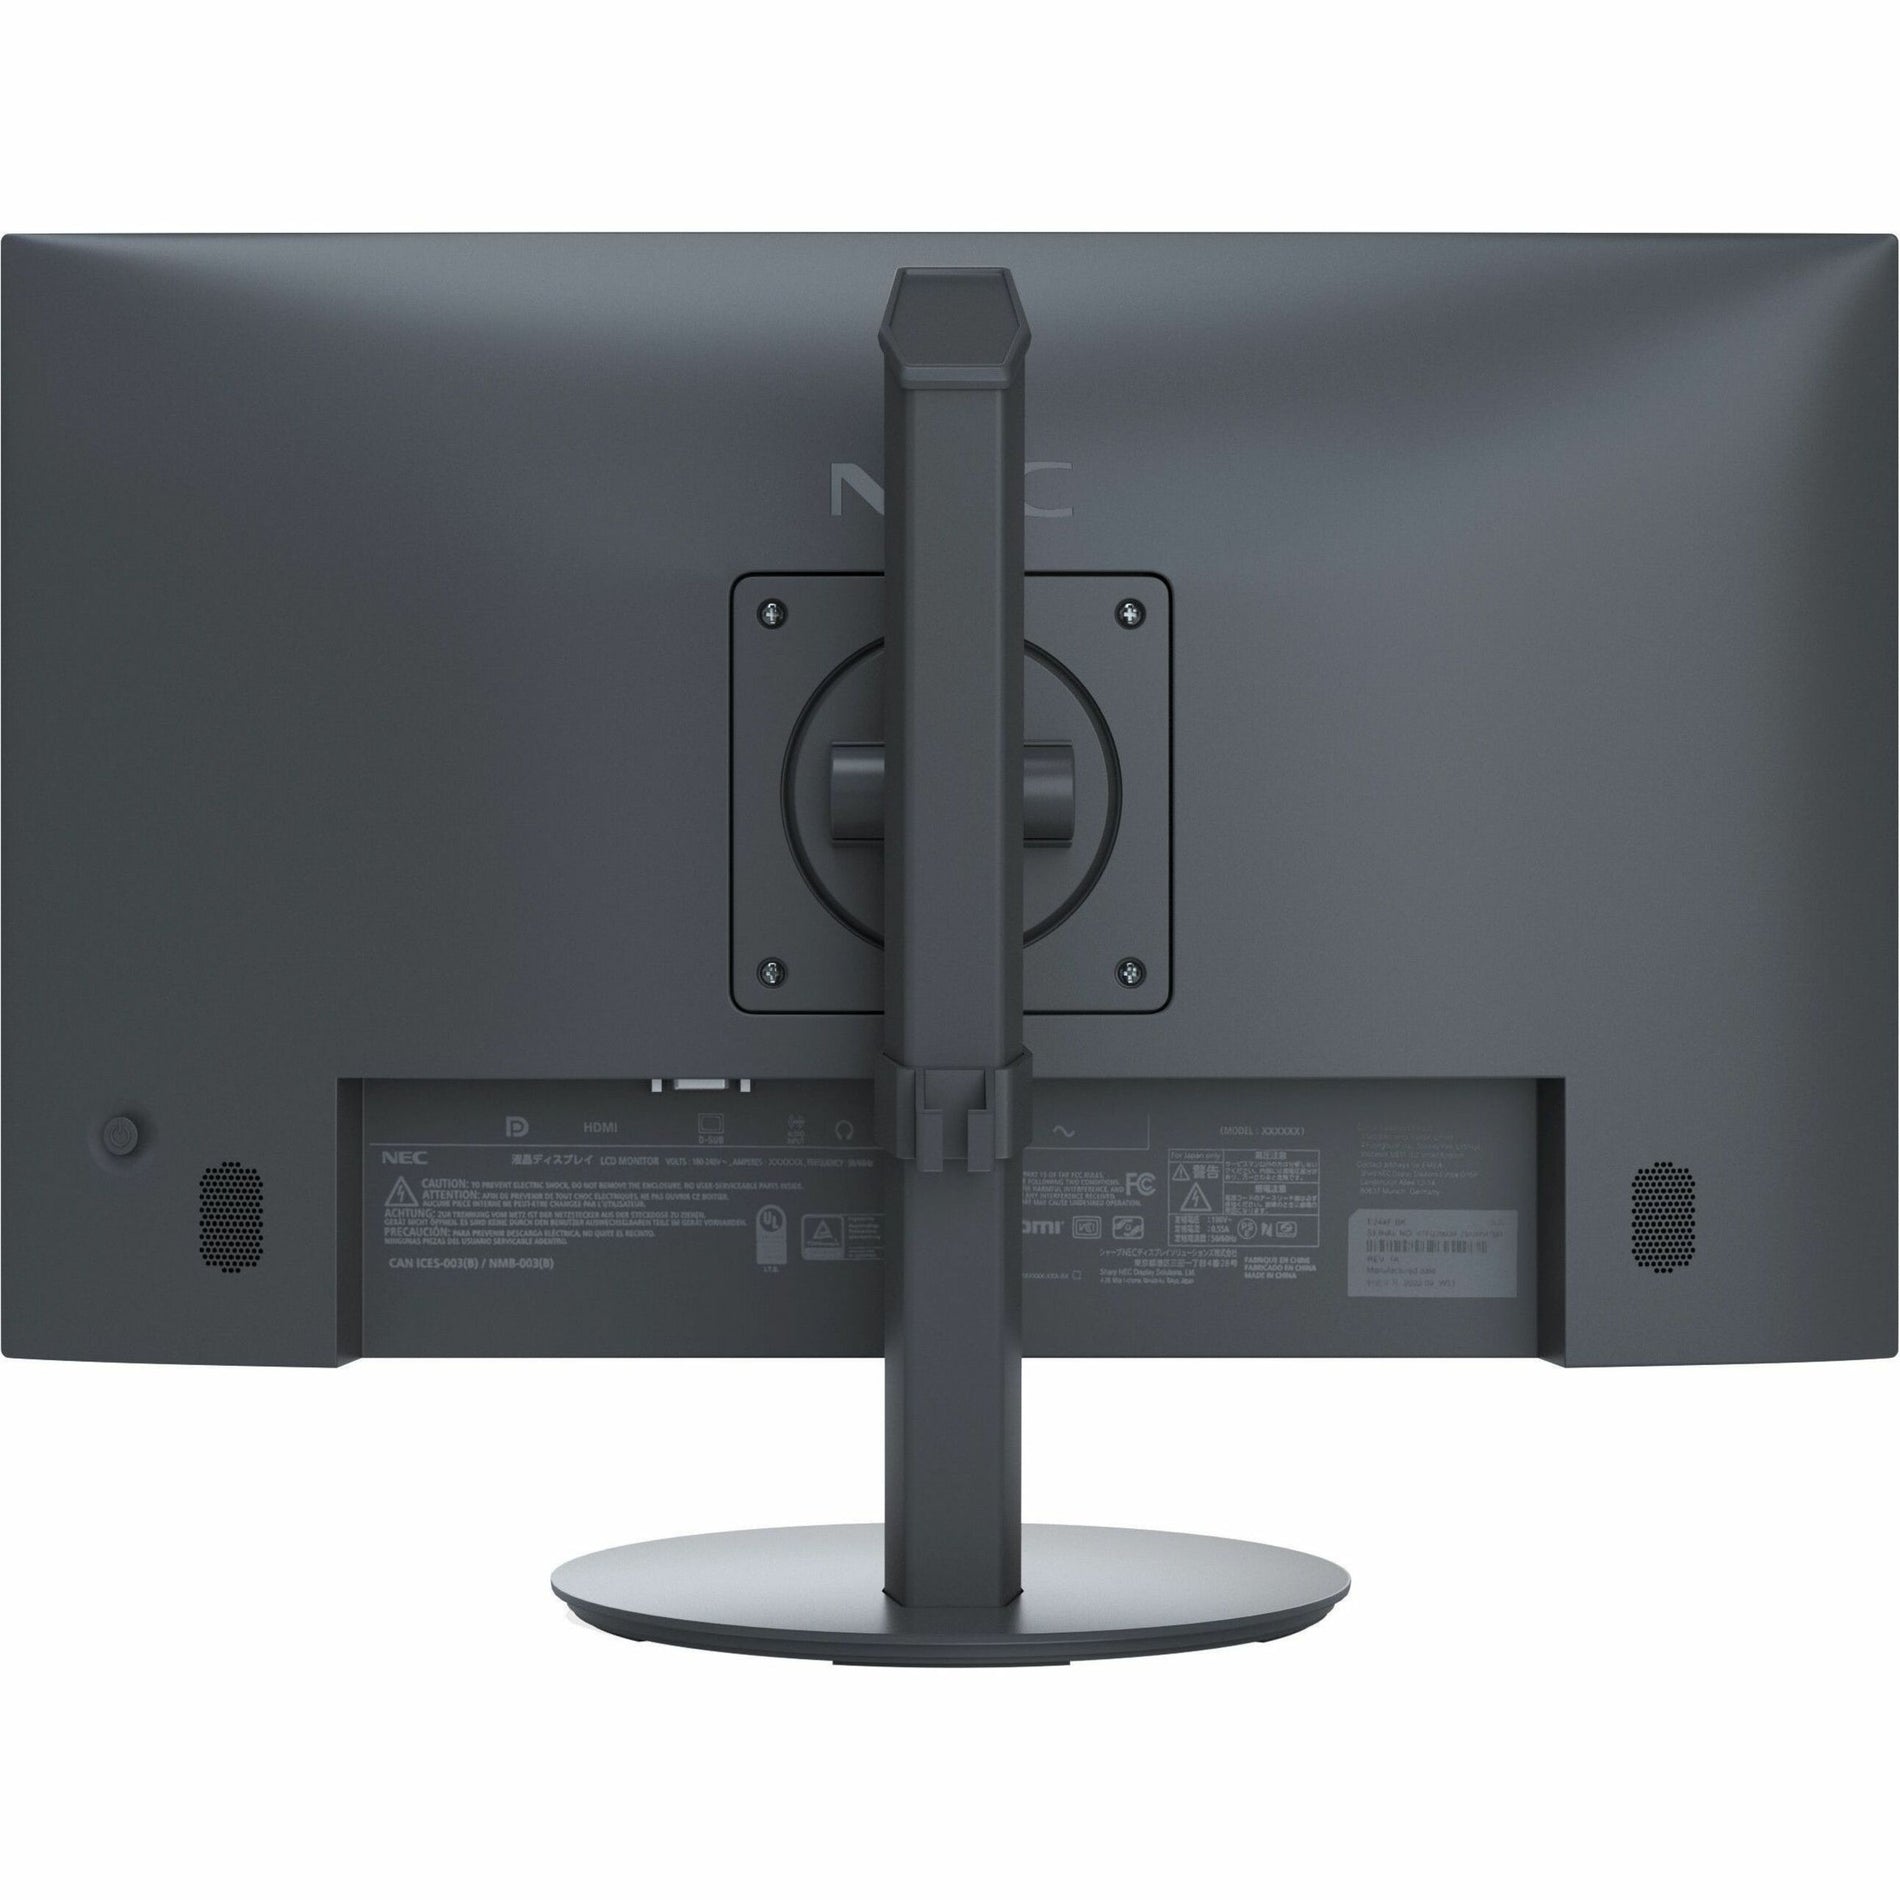 NEC Display E224FL-BK MultiSync 21.5 LED Monitor, Full HD, 3-Sided, 75Hz Refresh Rate